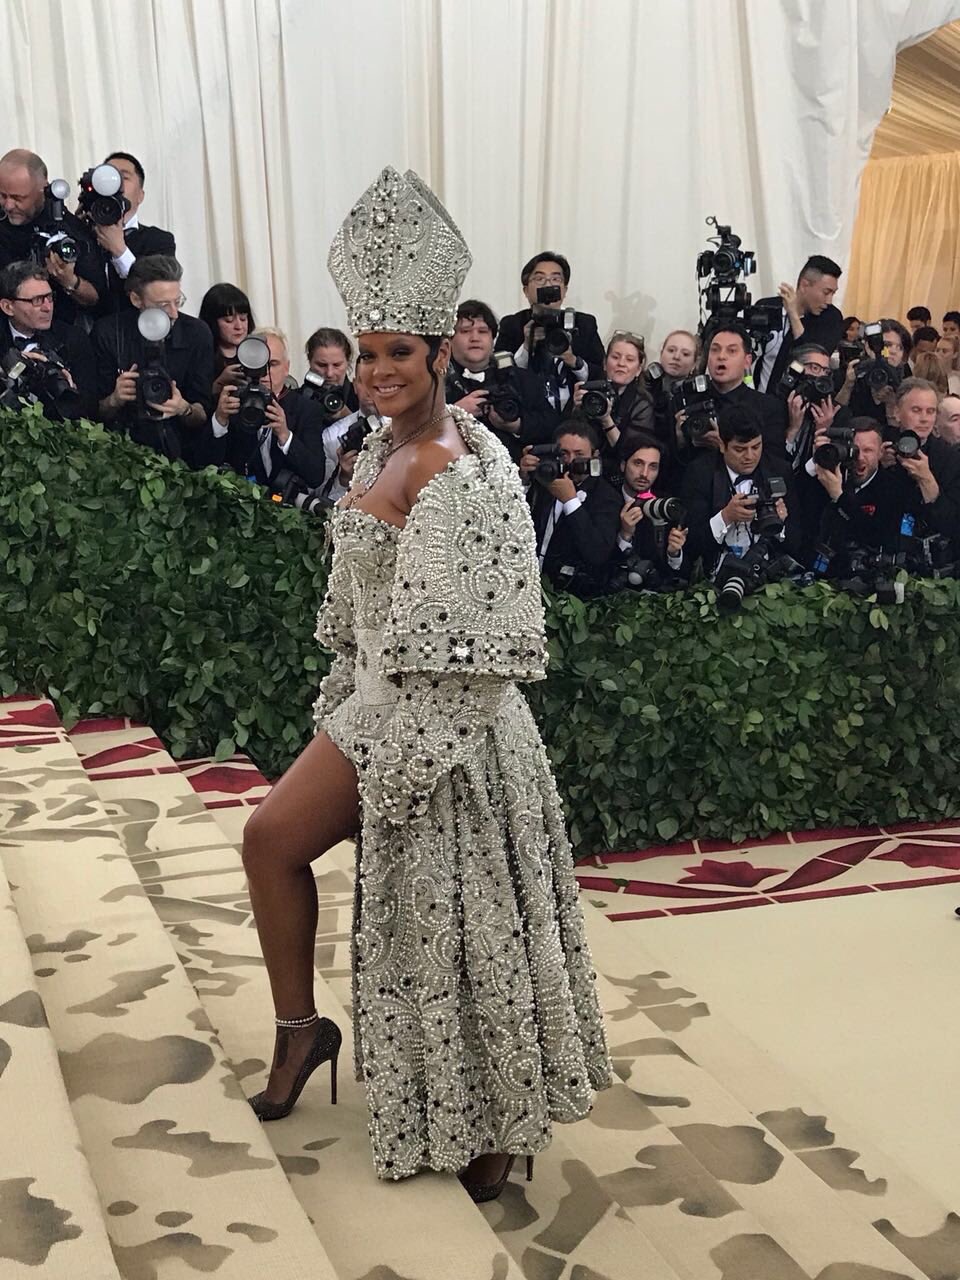 Rihanna Wears Elaborate Dress and Papal Mitre to 2018 Met Gala